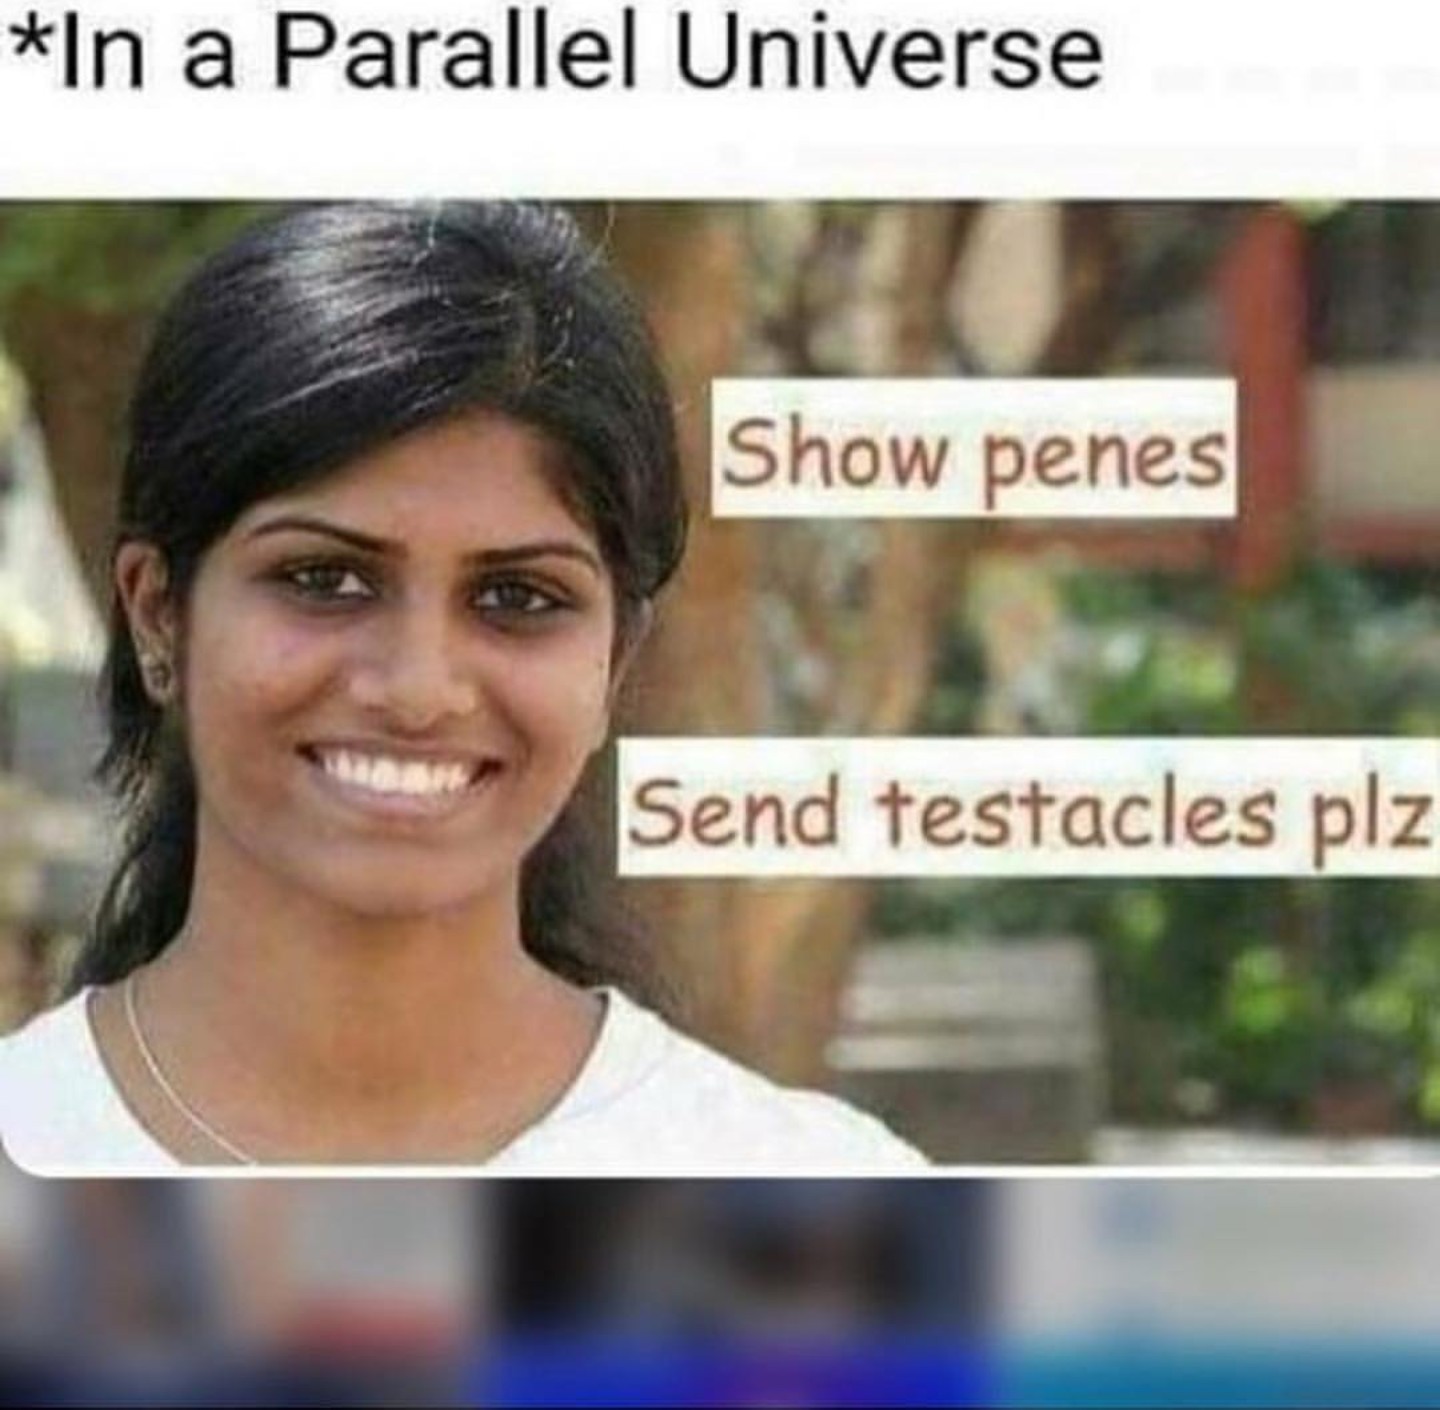 The Best Indian Memes Memedroid